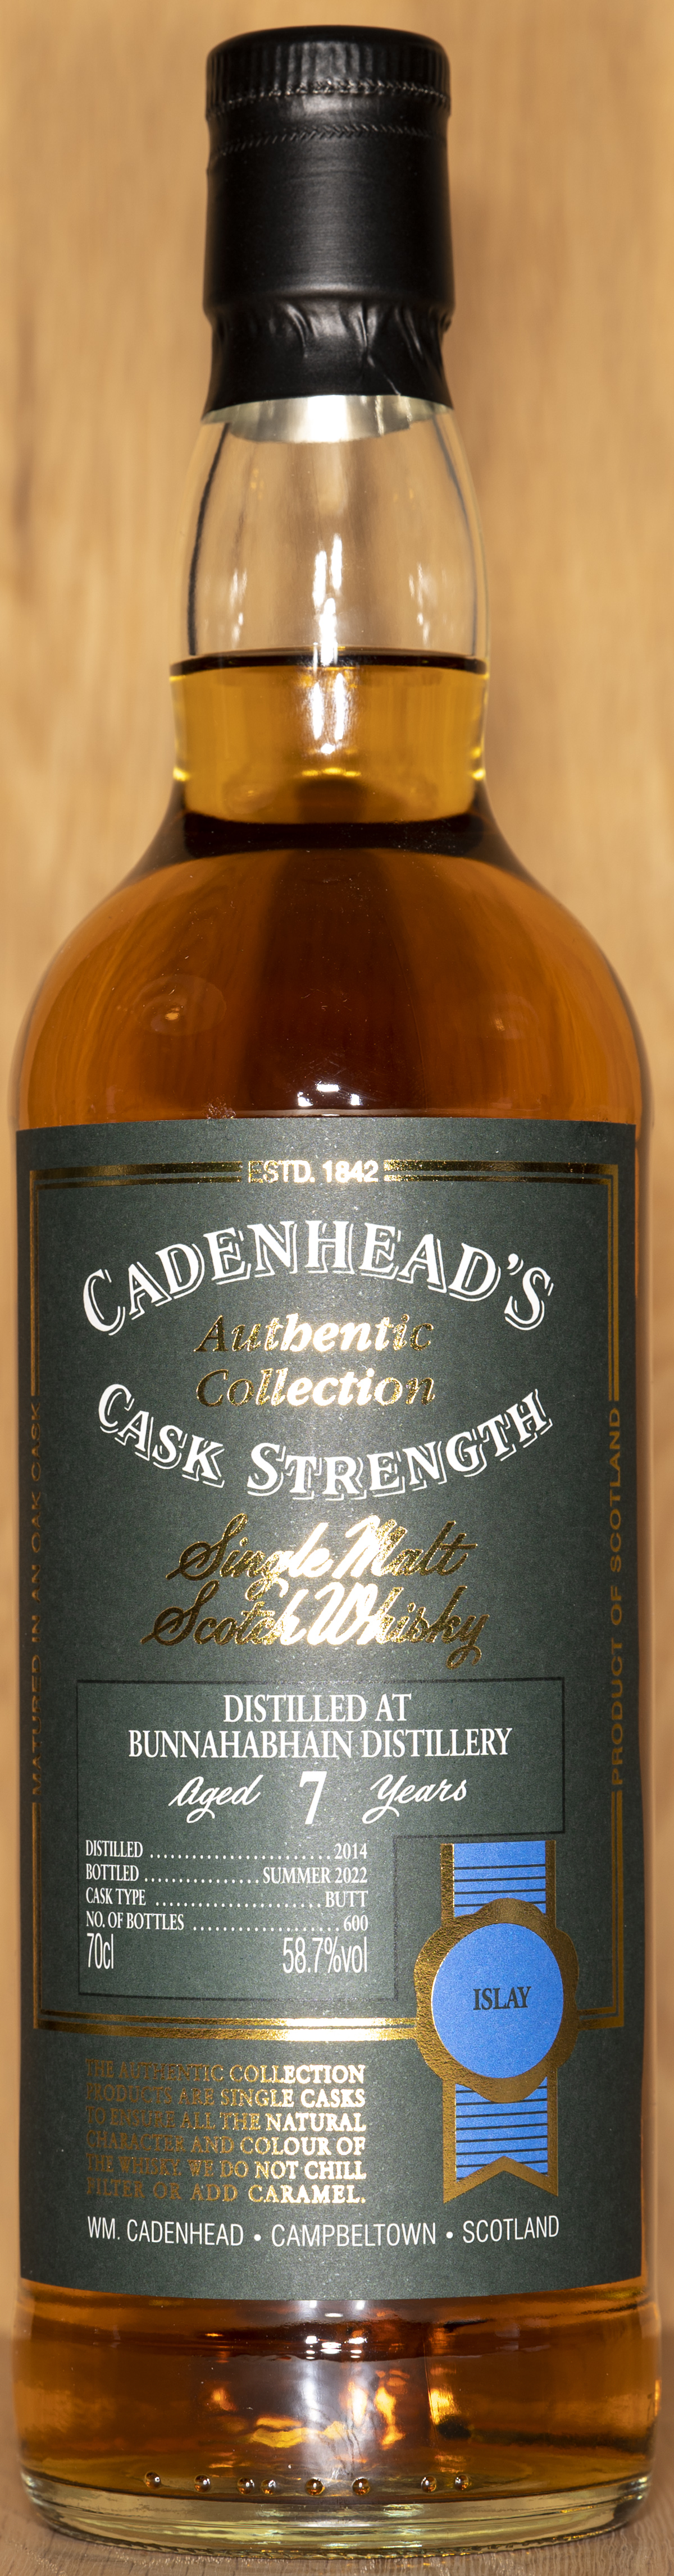 Billede: DSC_5027 - Cadenheads Authentic Collection Bunnahabhain 7 - bottle front.jpg